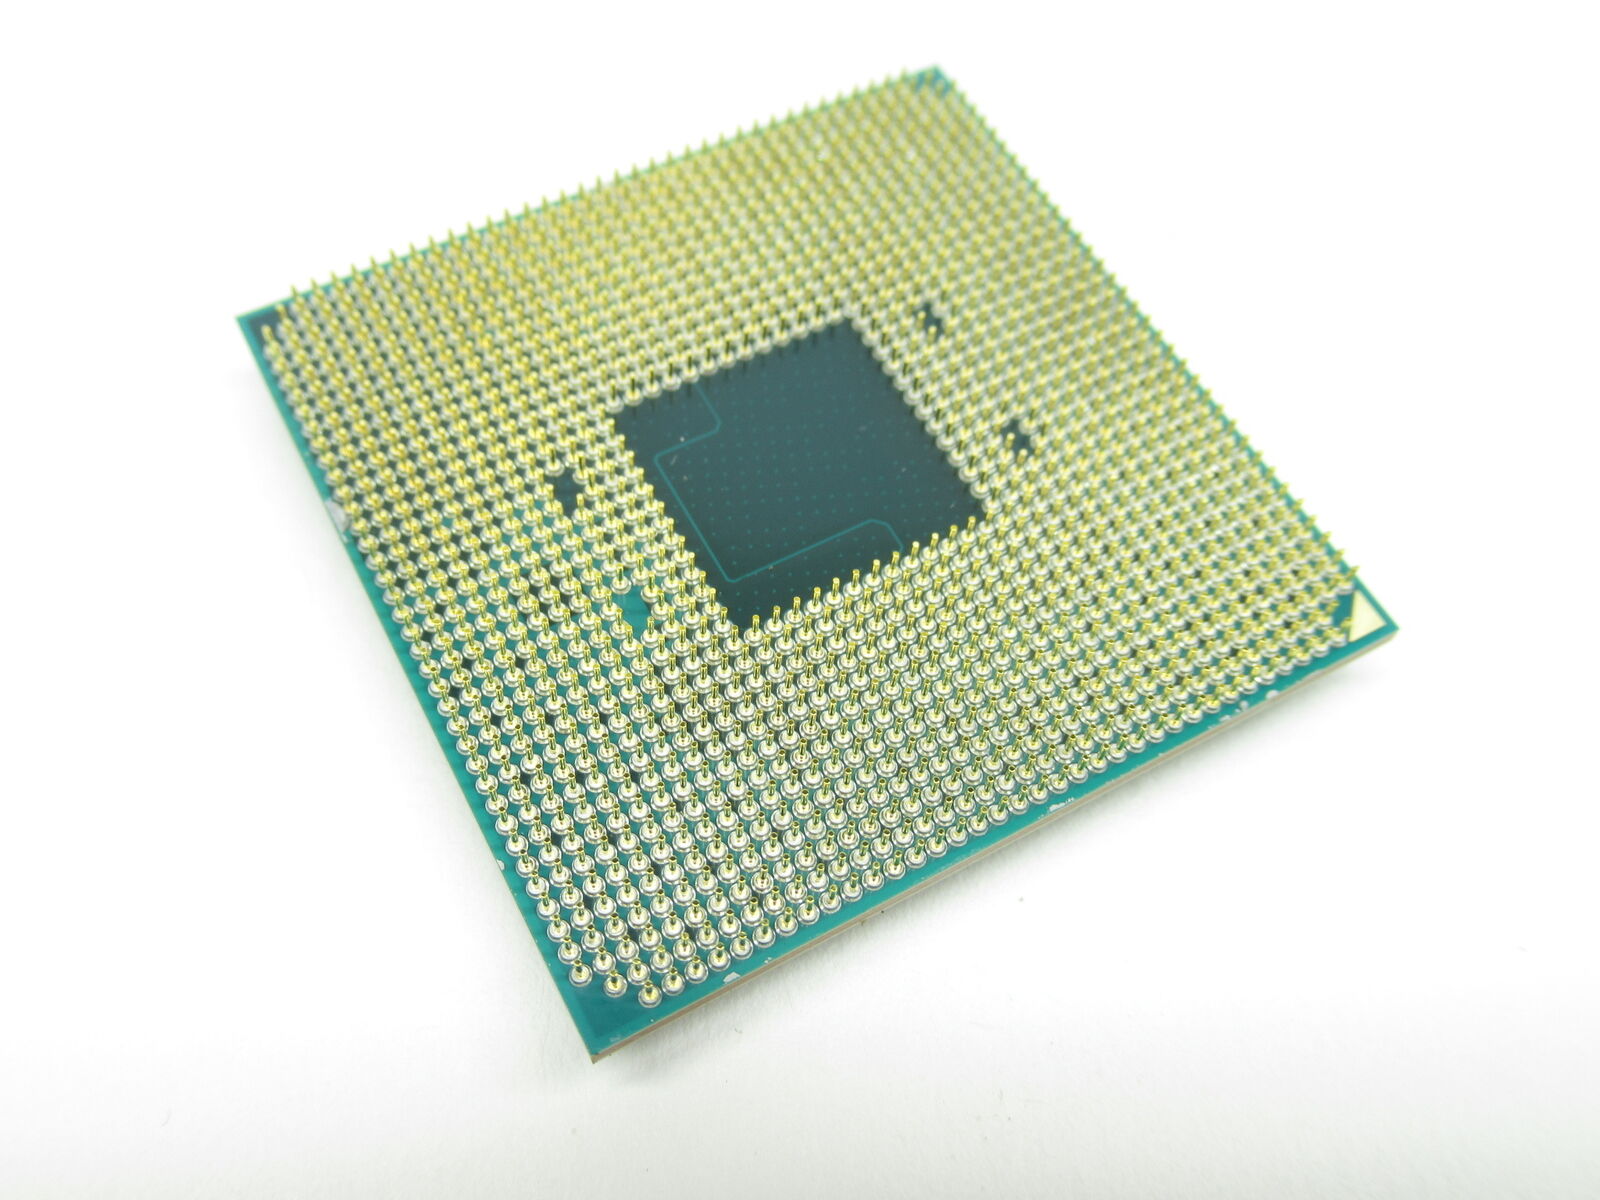 AMD RYZEN 5 PRO 2400G PROCESSOR 3.6GHz CPU